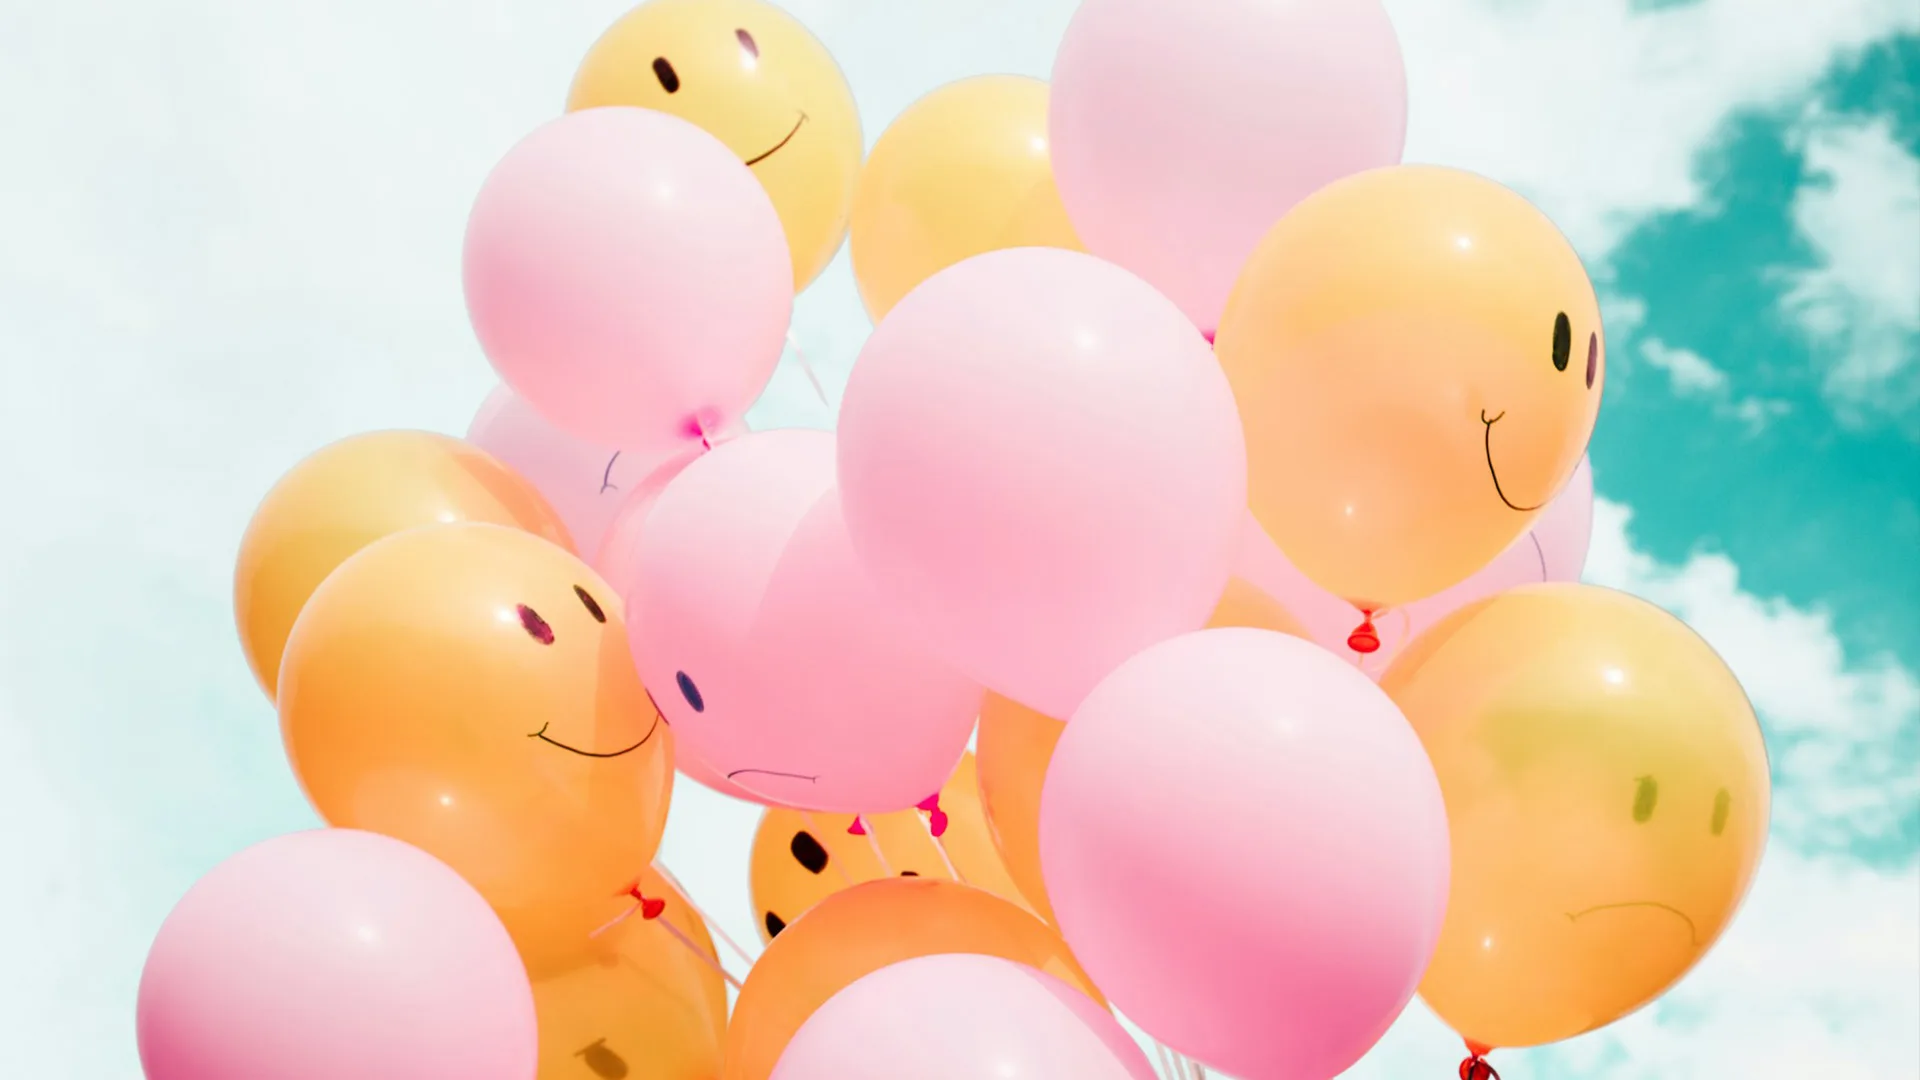 Pink and orange balloons